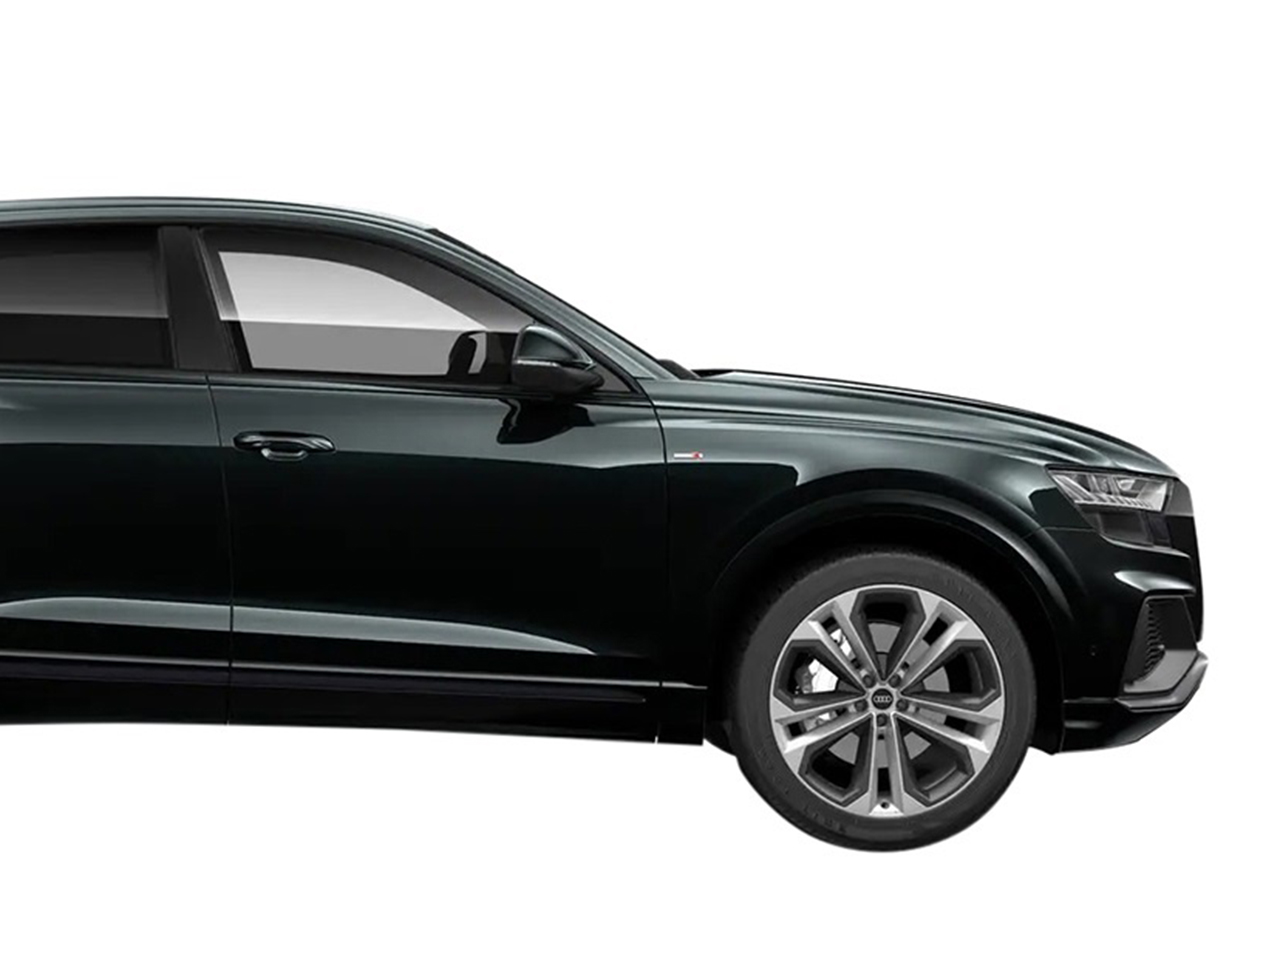 Audi Q8 - Black Edition for hire